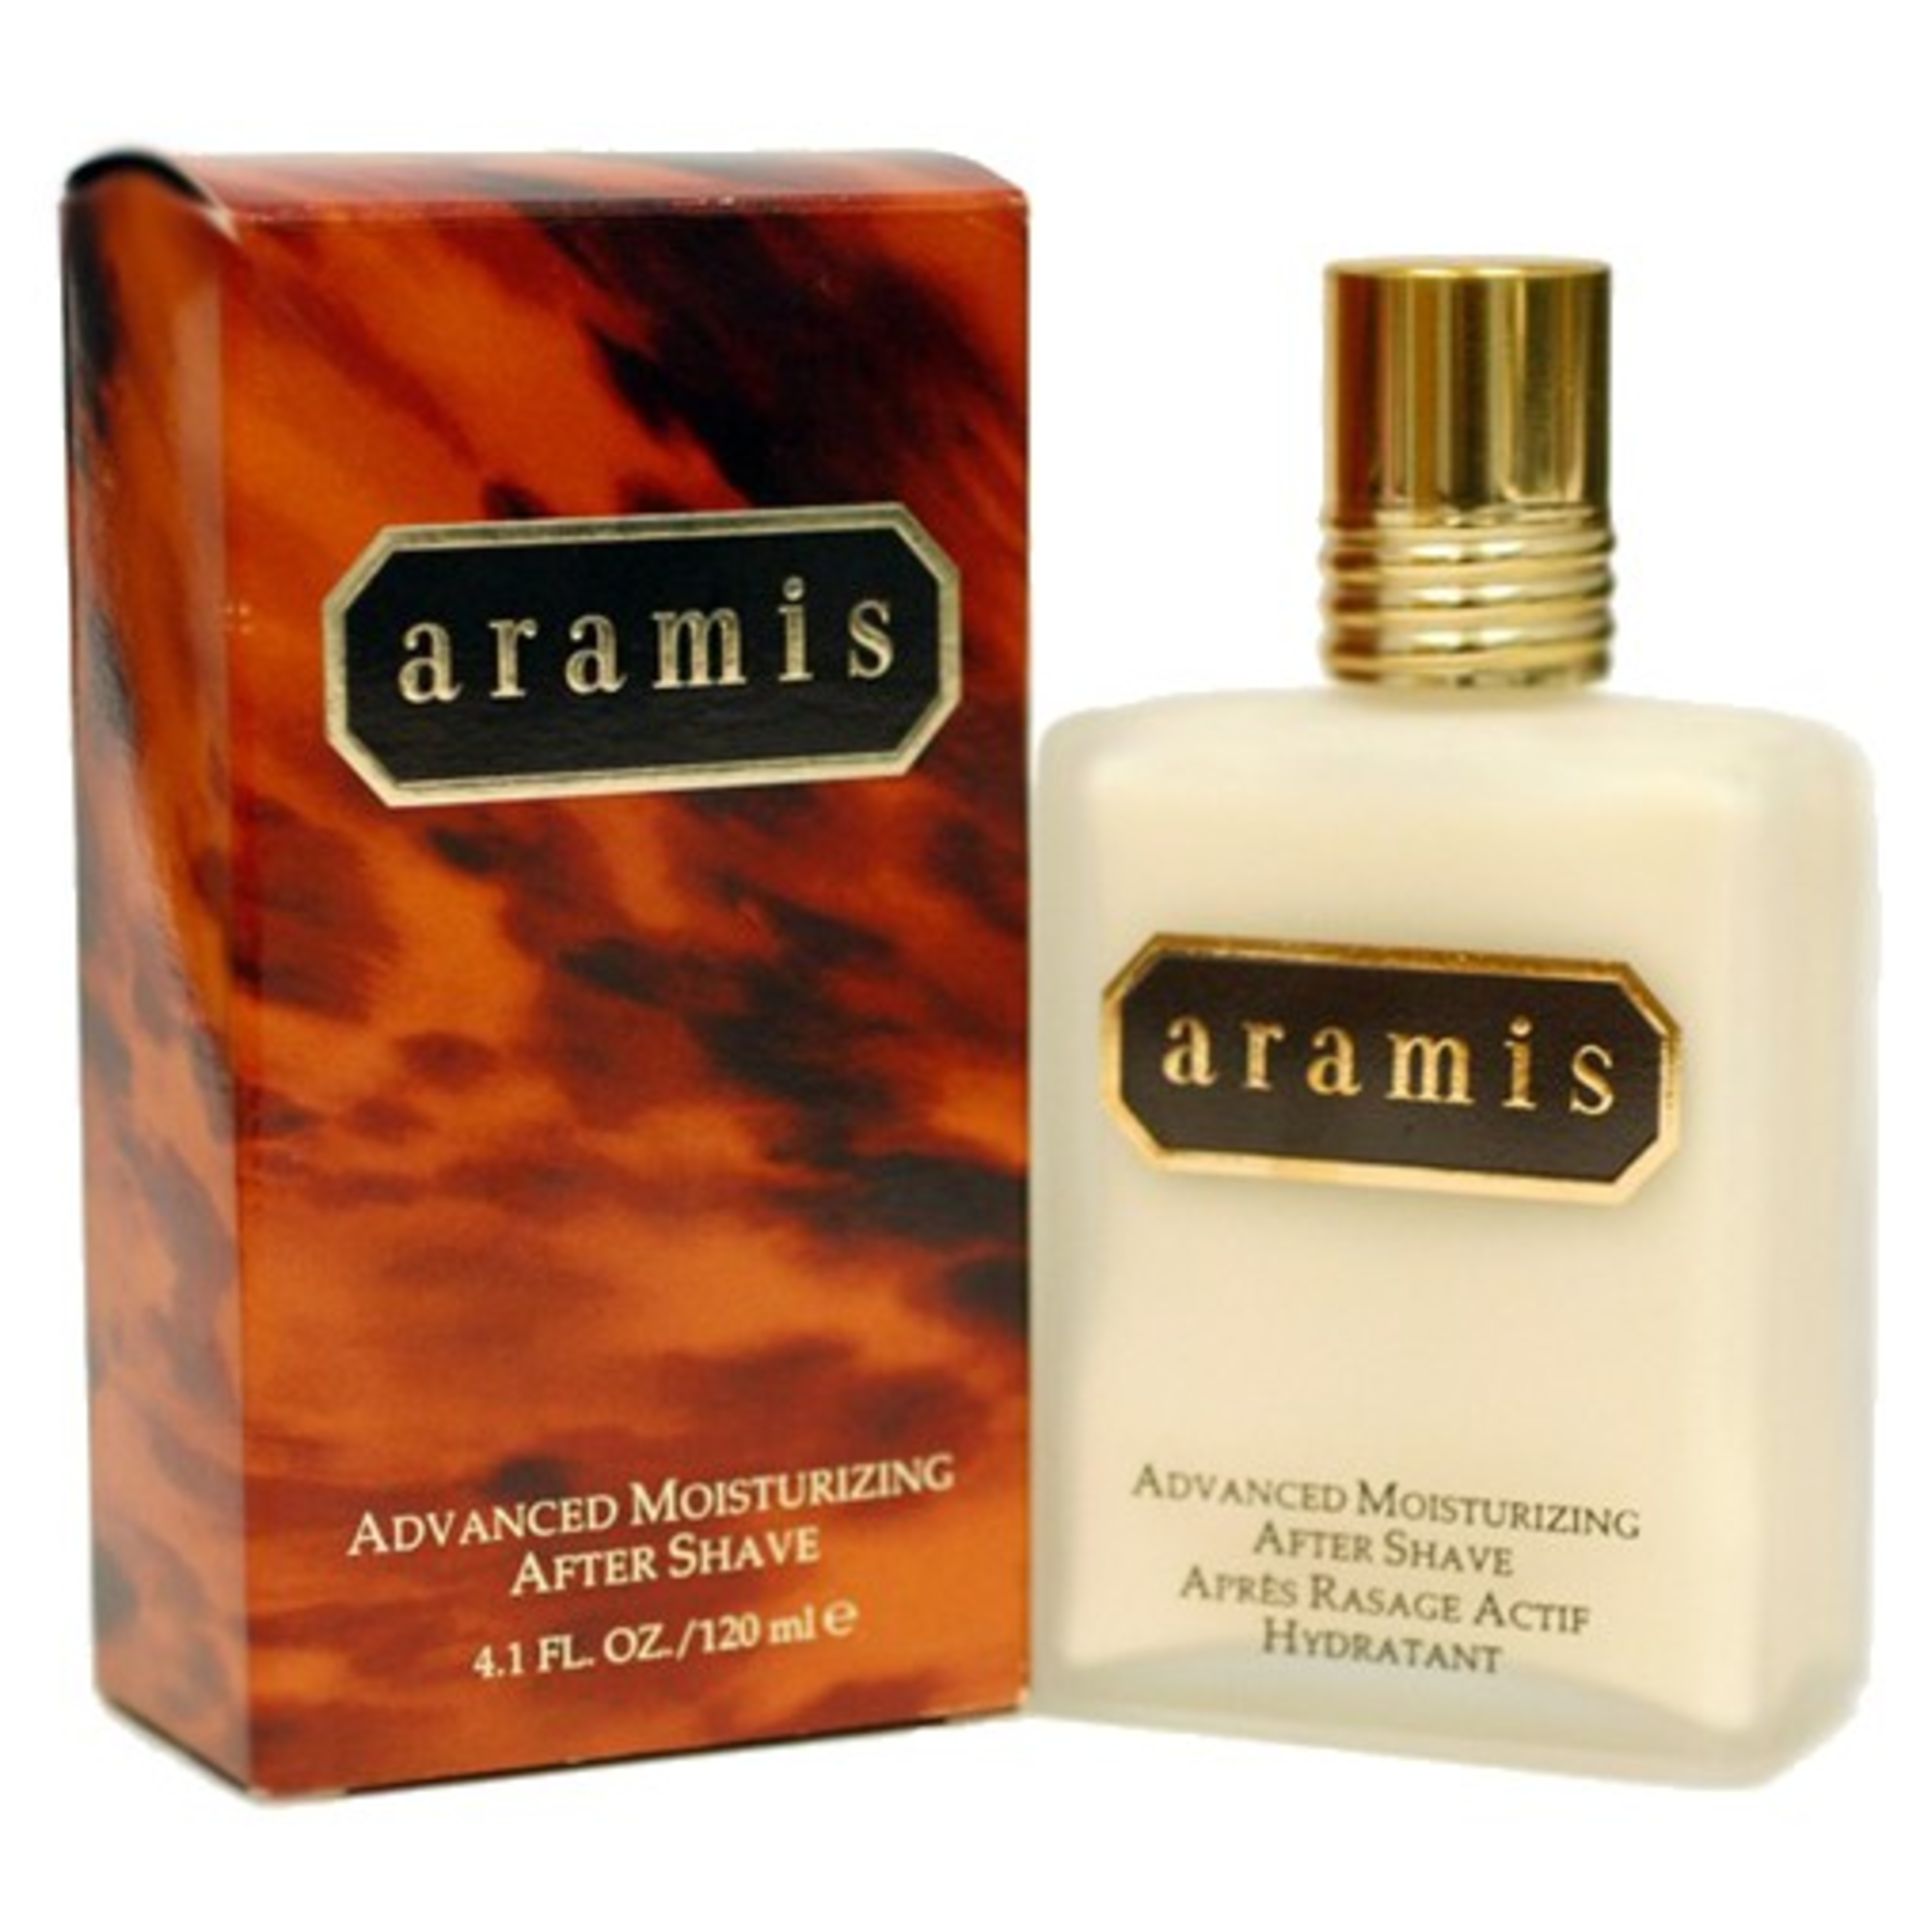 V Brand New Aramis Advanced Moisturising After Shave Balm eBay Price £38.20 X 2 YOUR BID PRICE TO BE